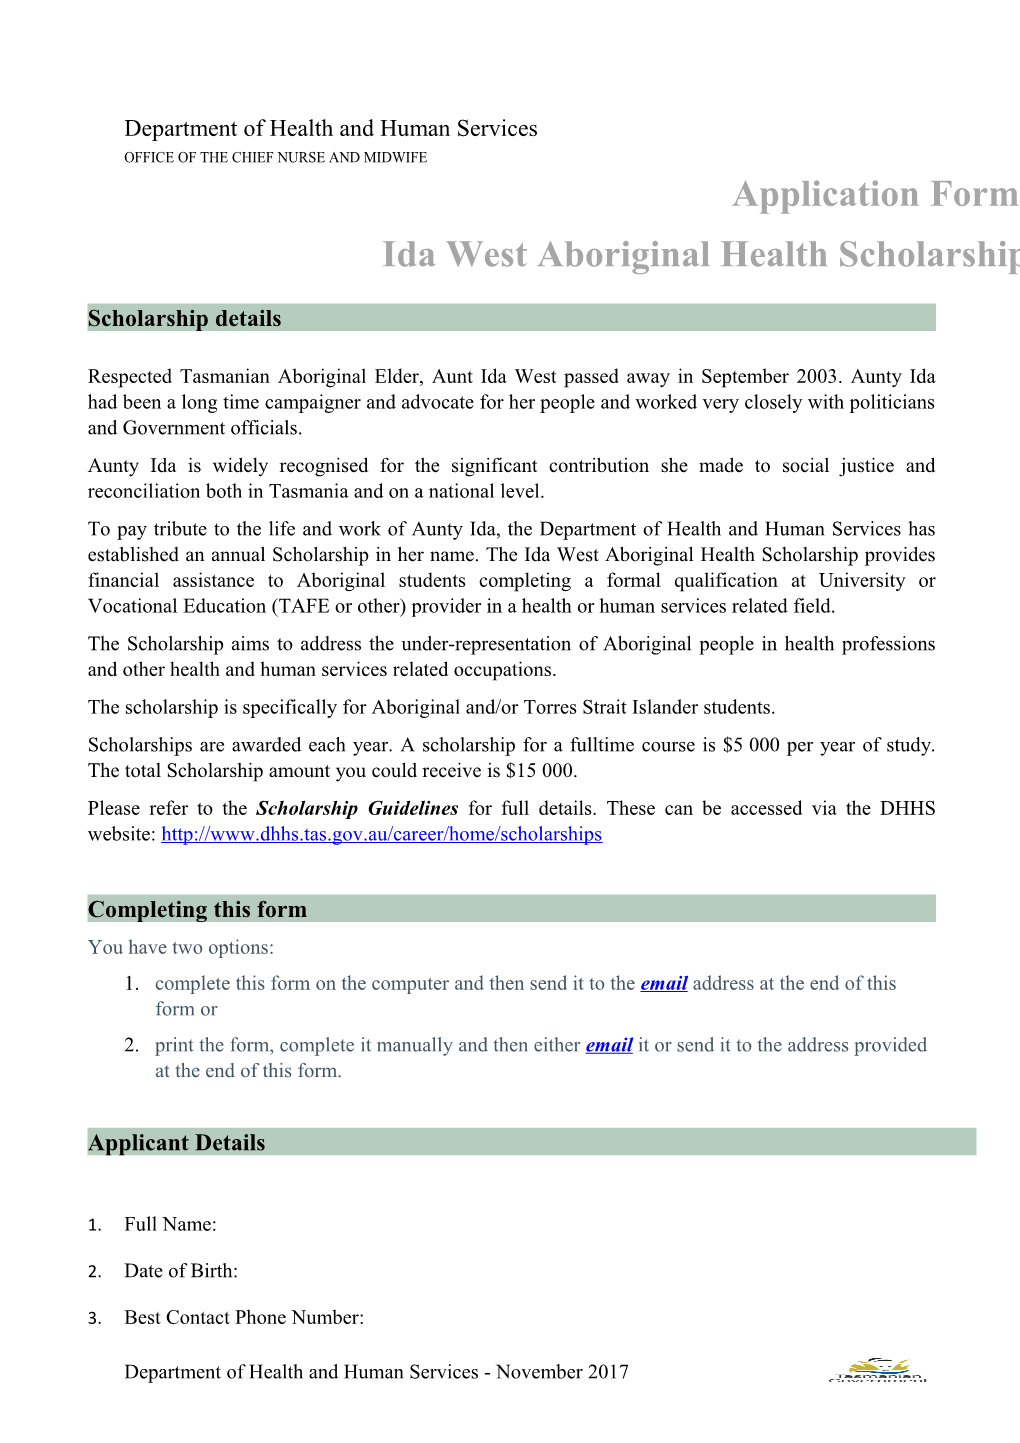 Ida West Aboriginal Health Scholarship Form November 2017